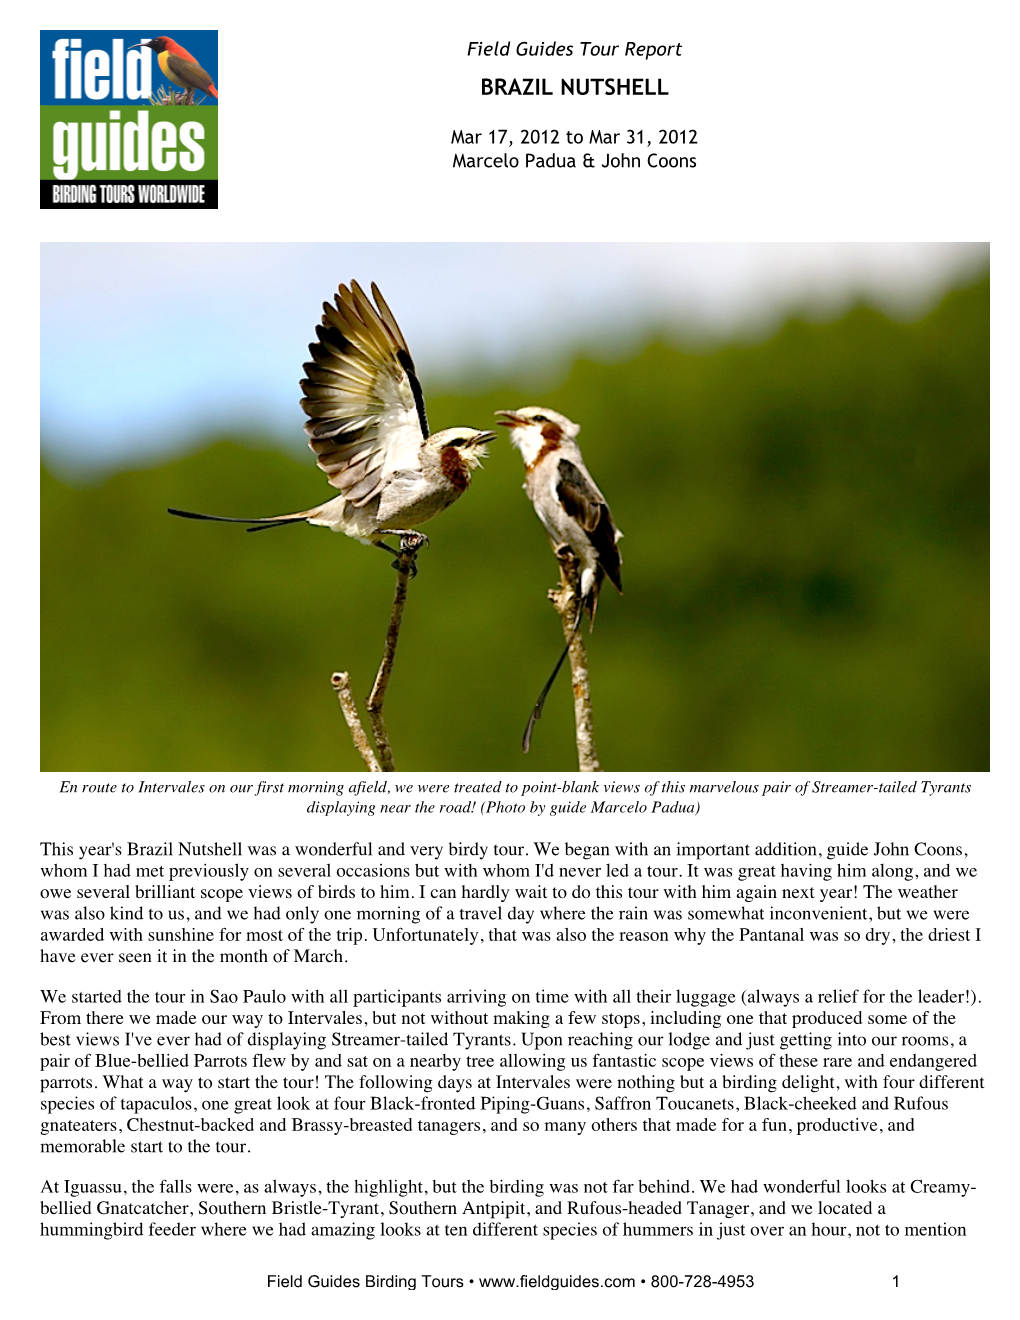 Field Guides Birding Tours Brazil Nutshell